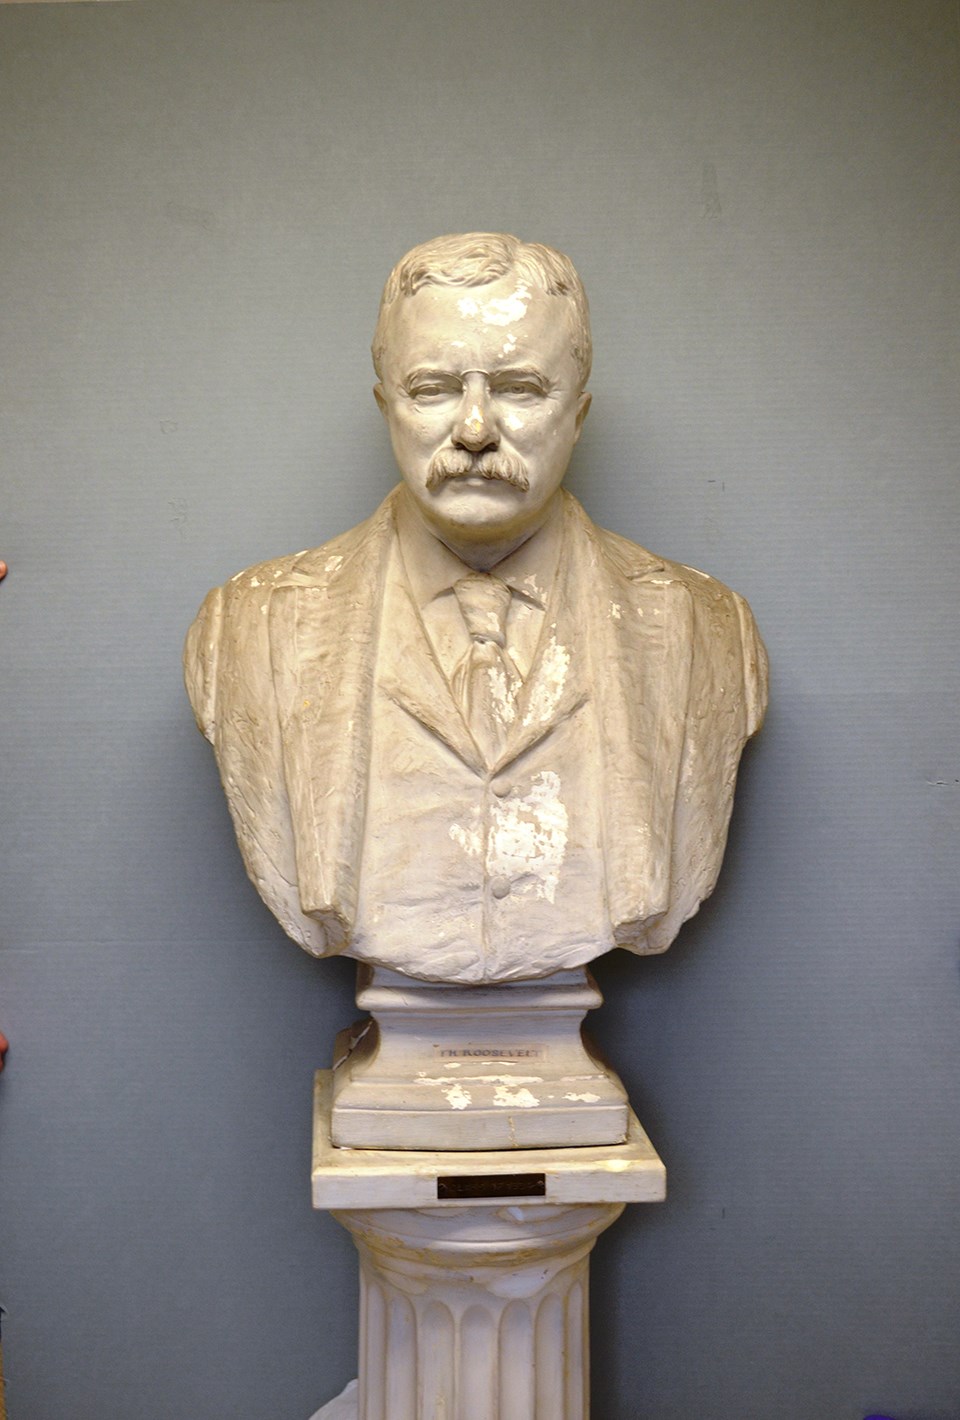 Theodore Roosevelt Bust